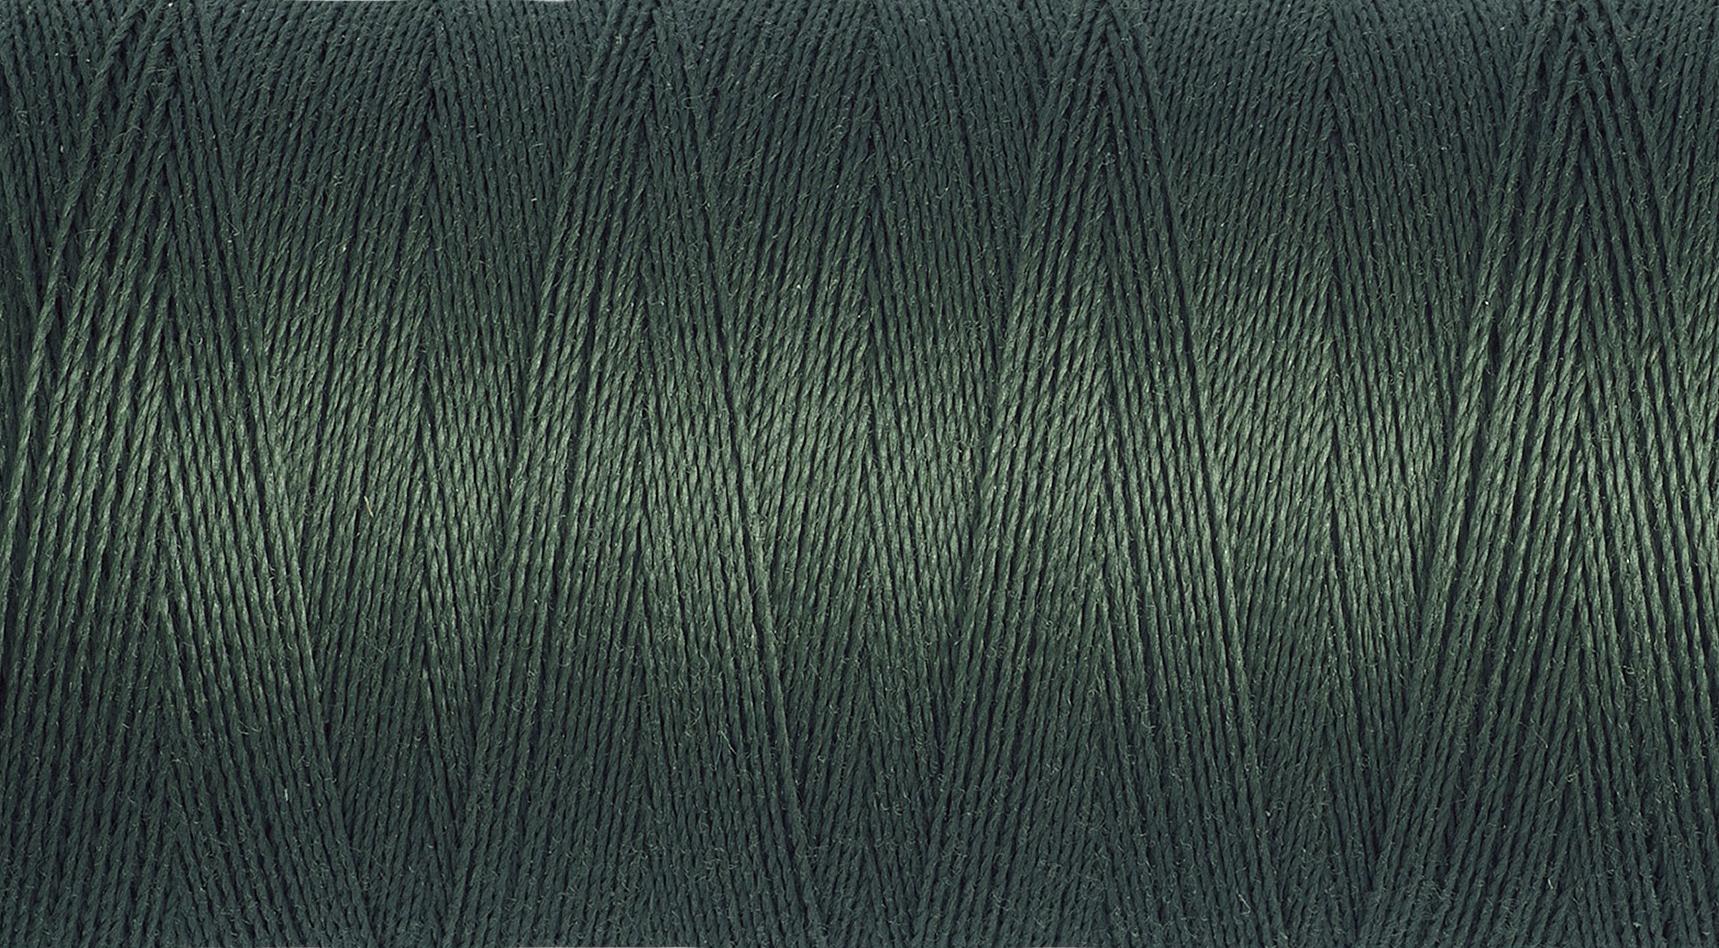 Gutermann Sew All 250m Full Thread Set - 102 Threads